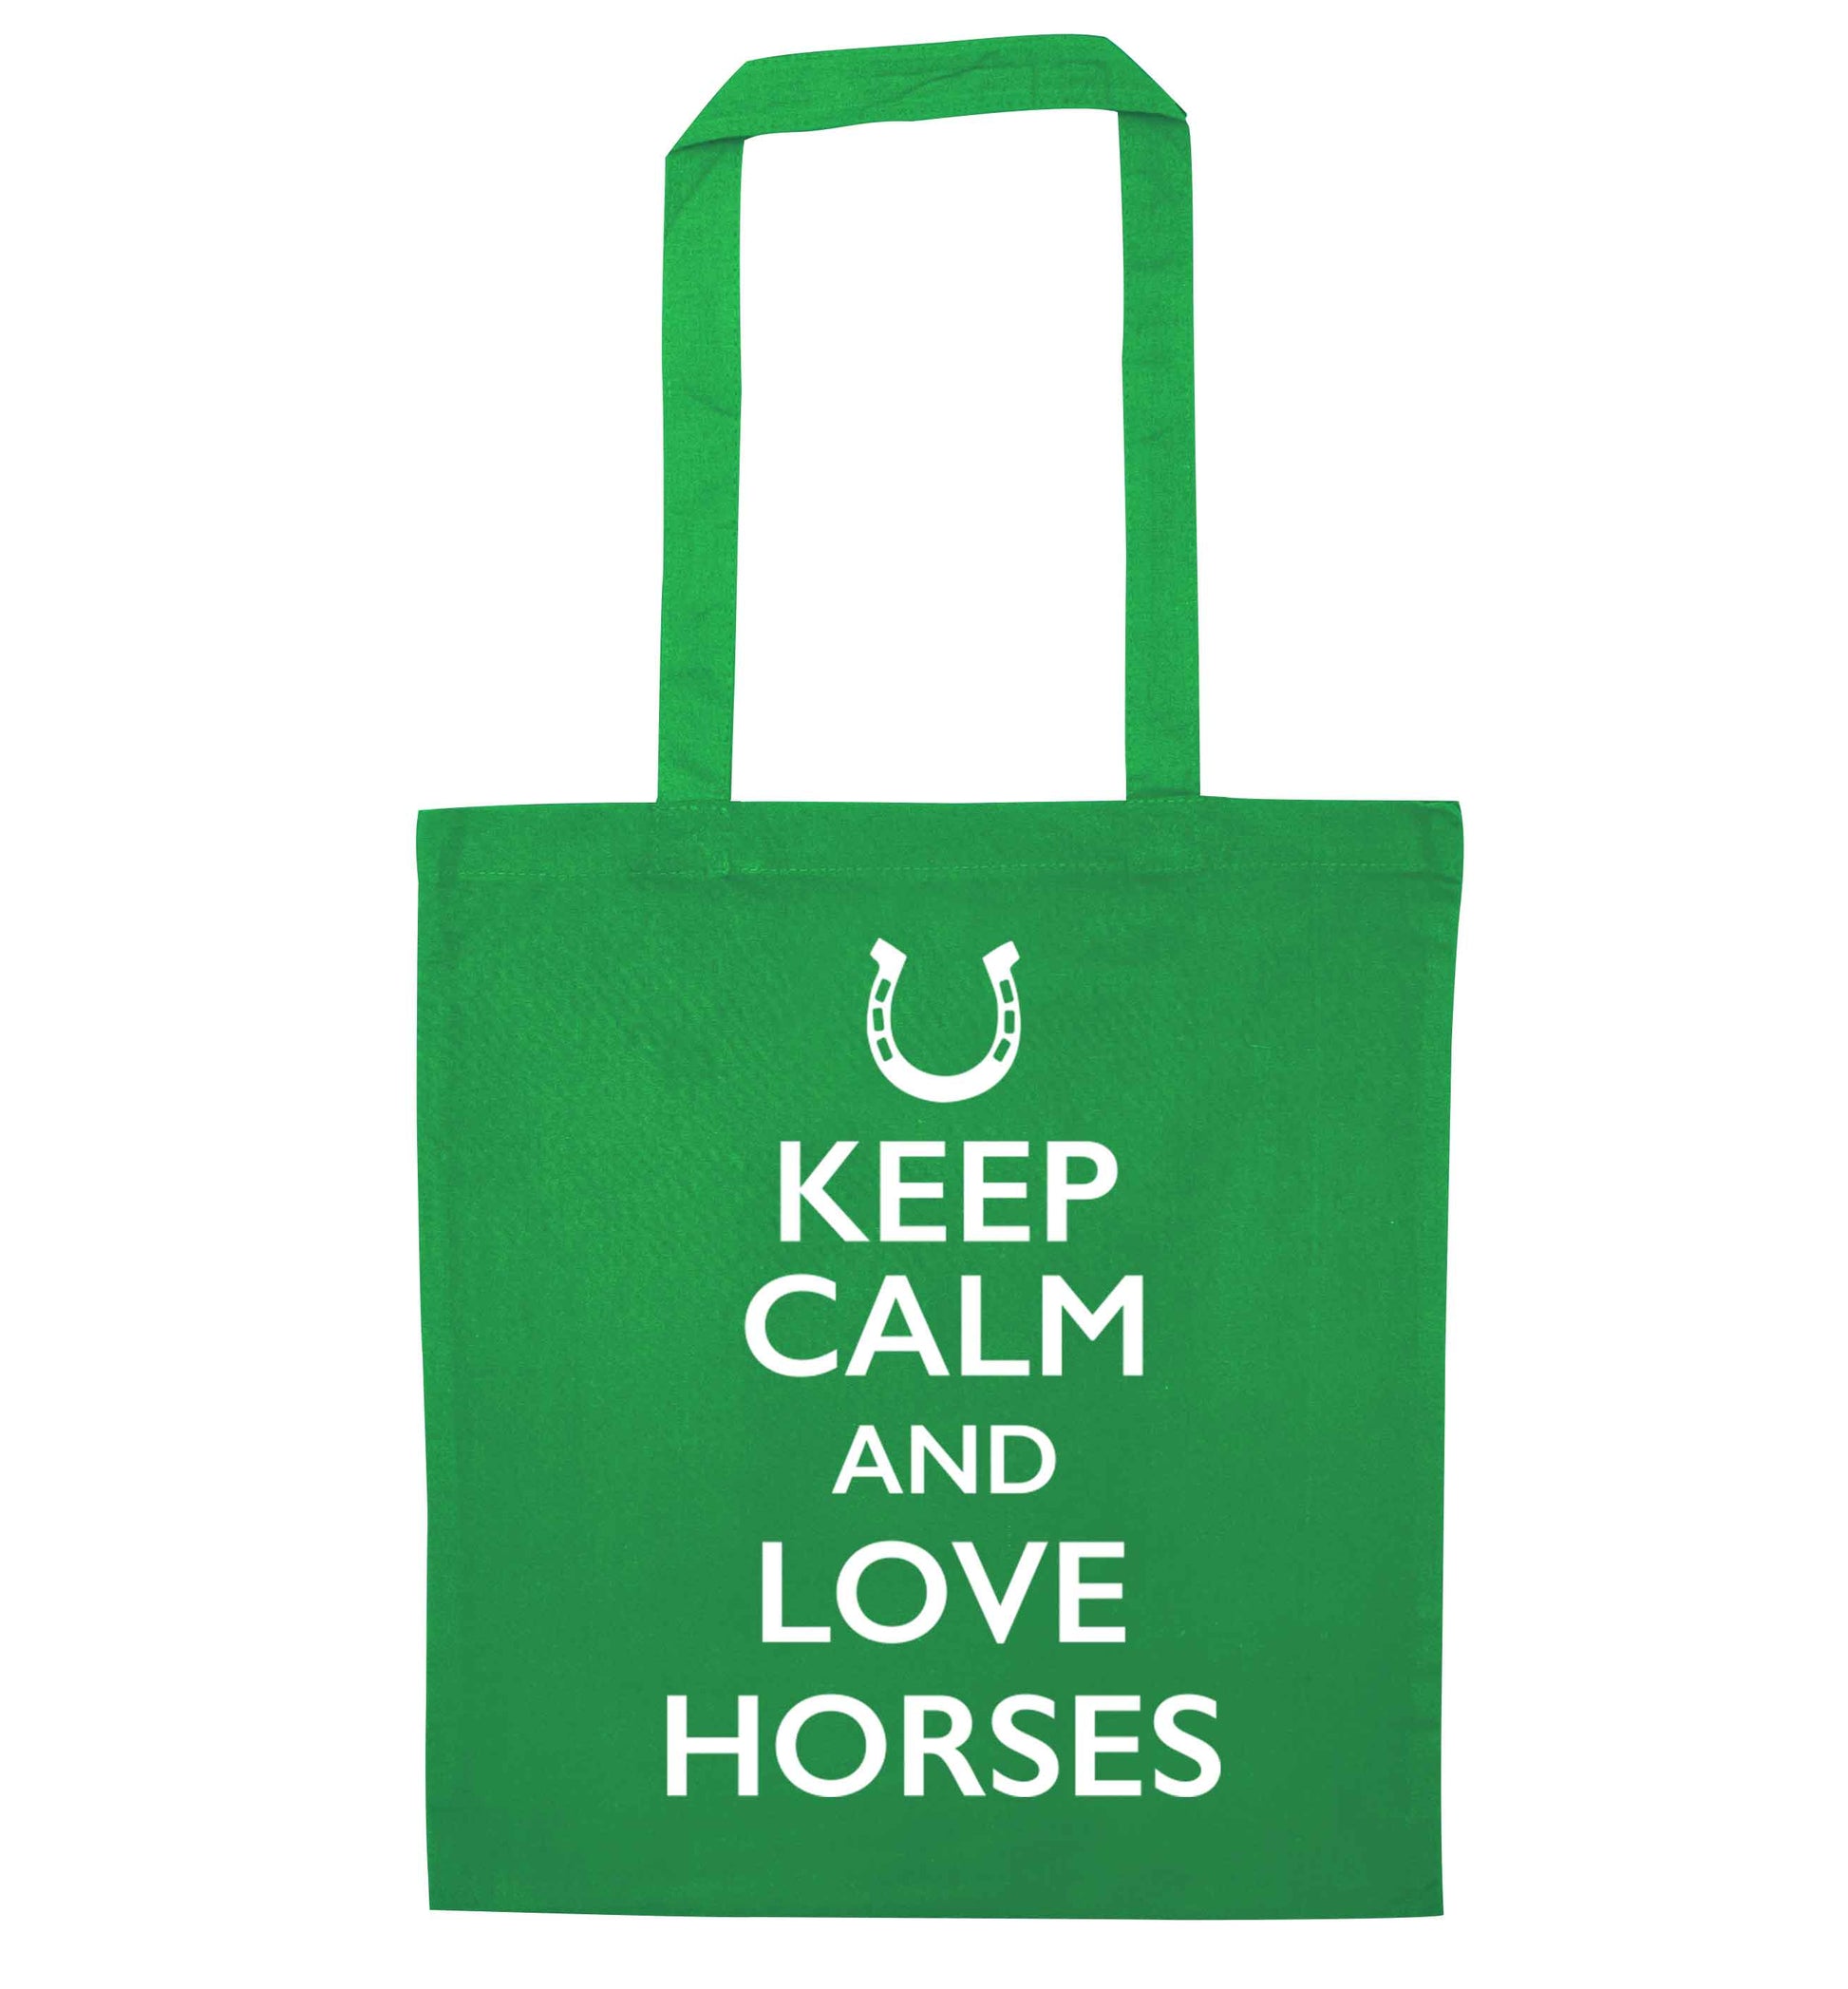 Keep calm and love horses green tote bag